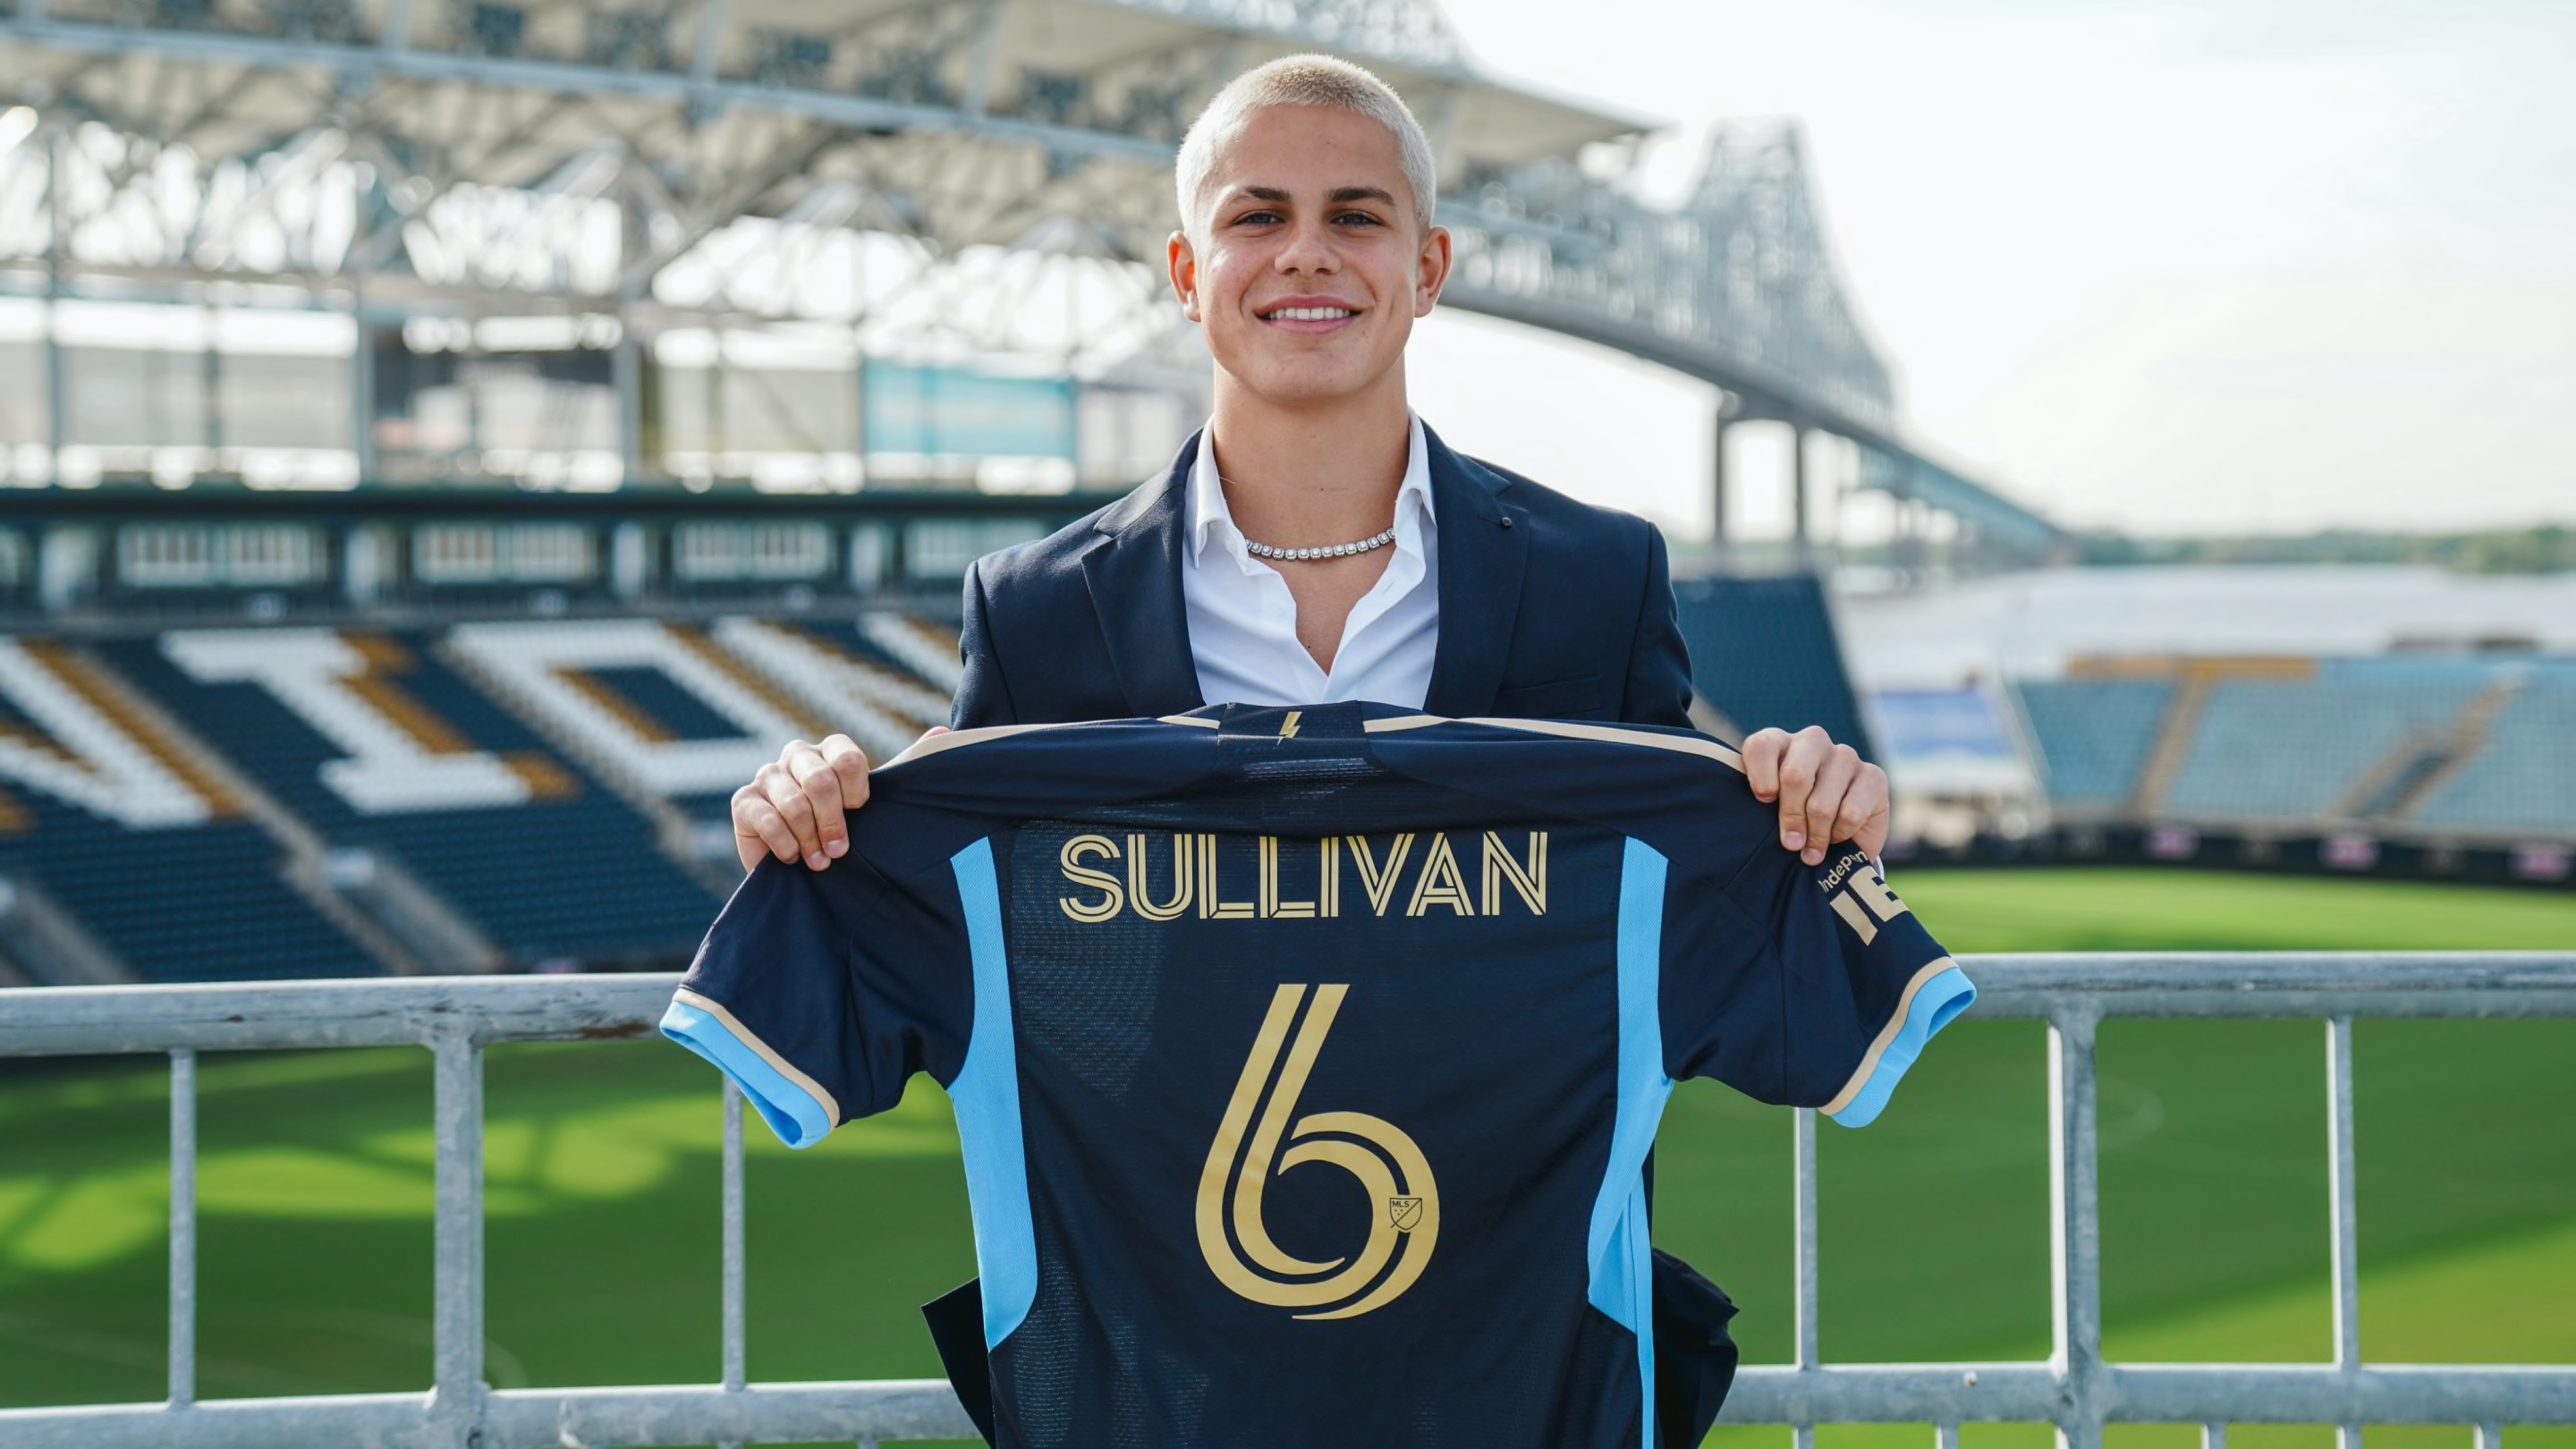 Cavan Sullivan signs largest Homegrown player deal in MLS history